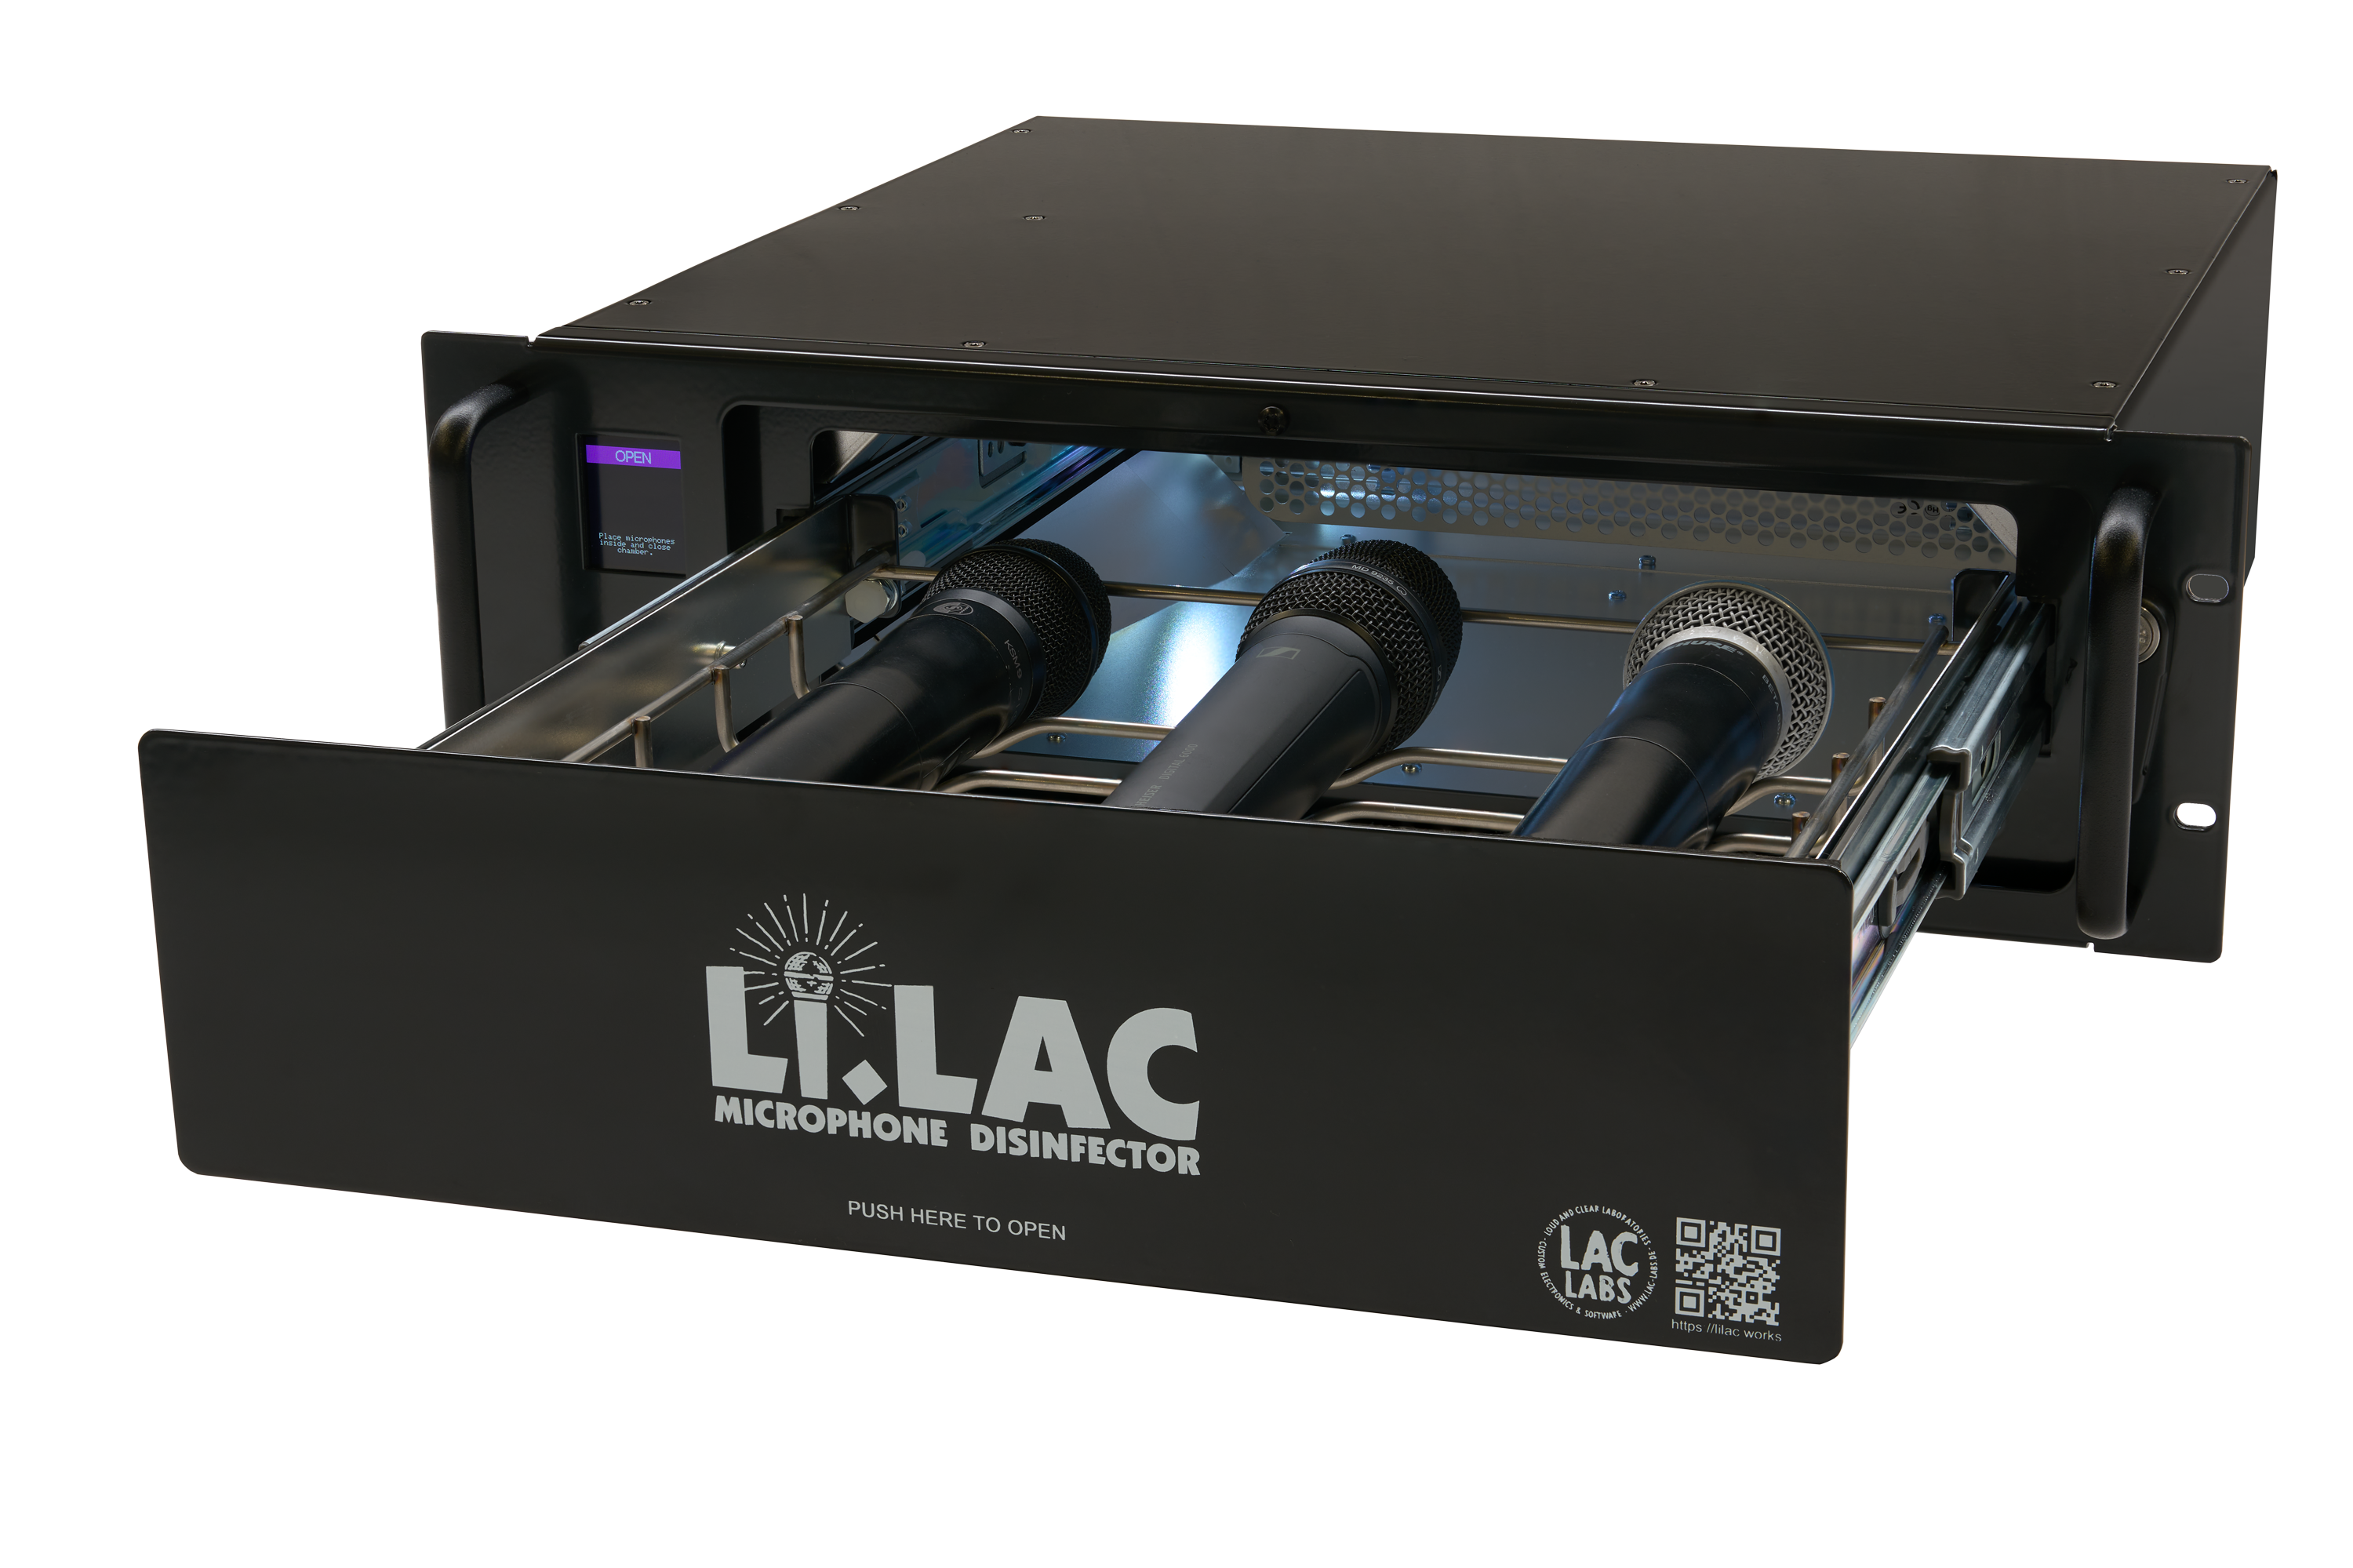 LAC Labs — Li.LAC Microphone Disinfector